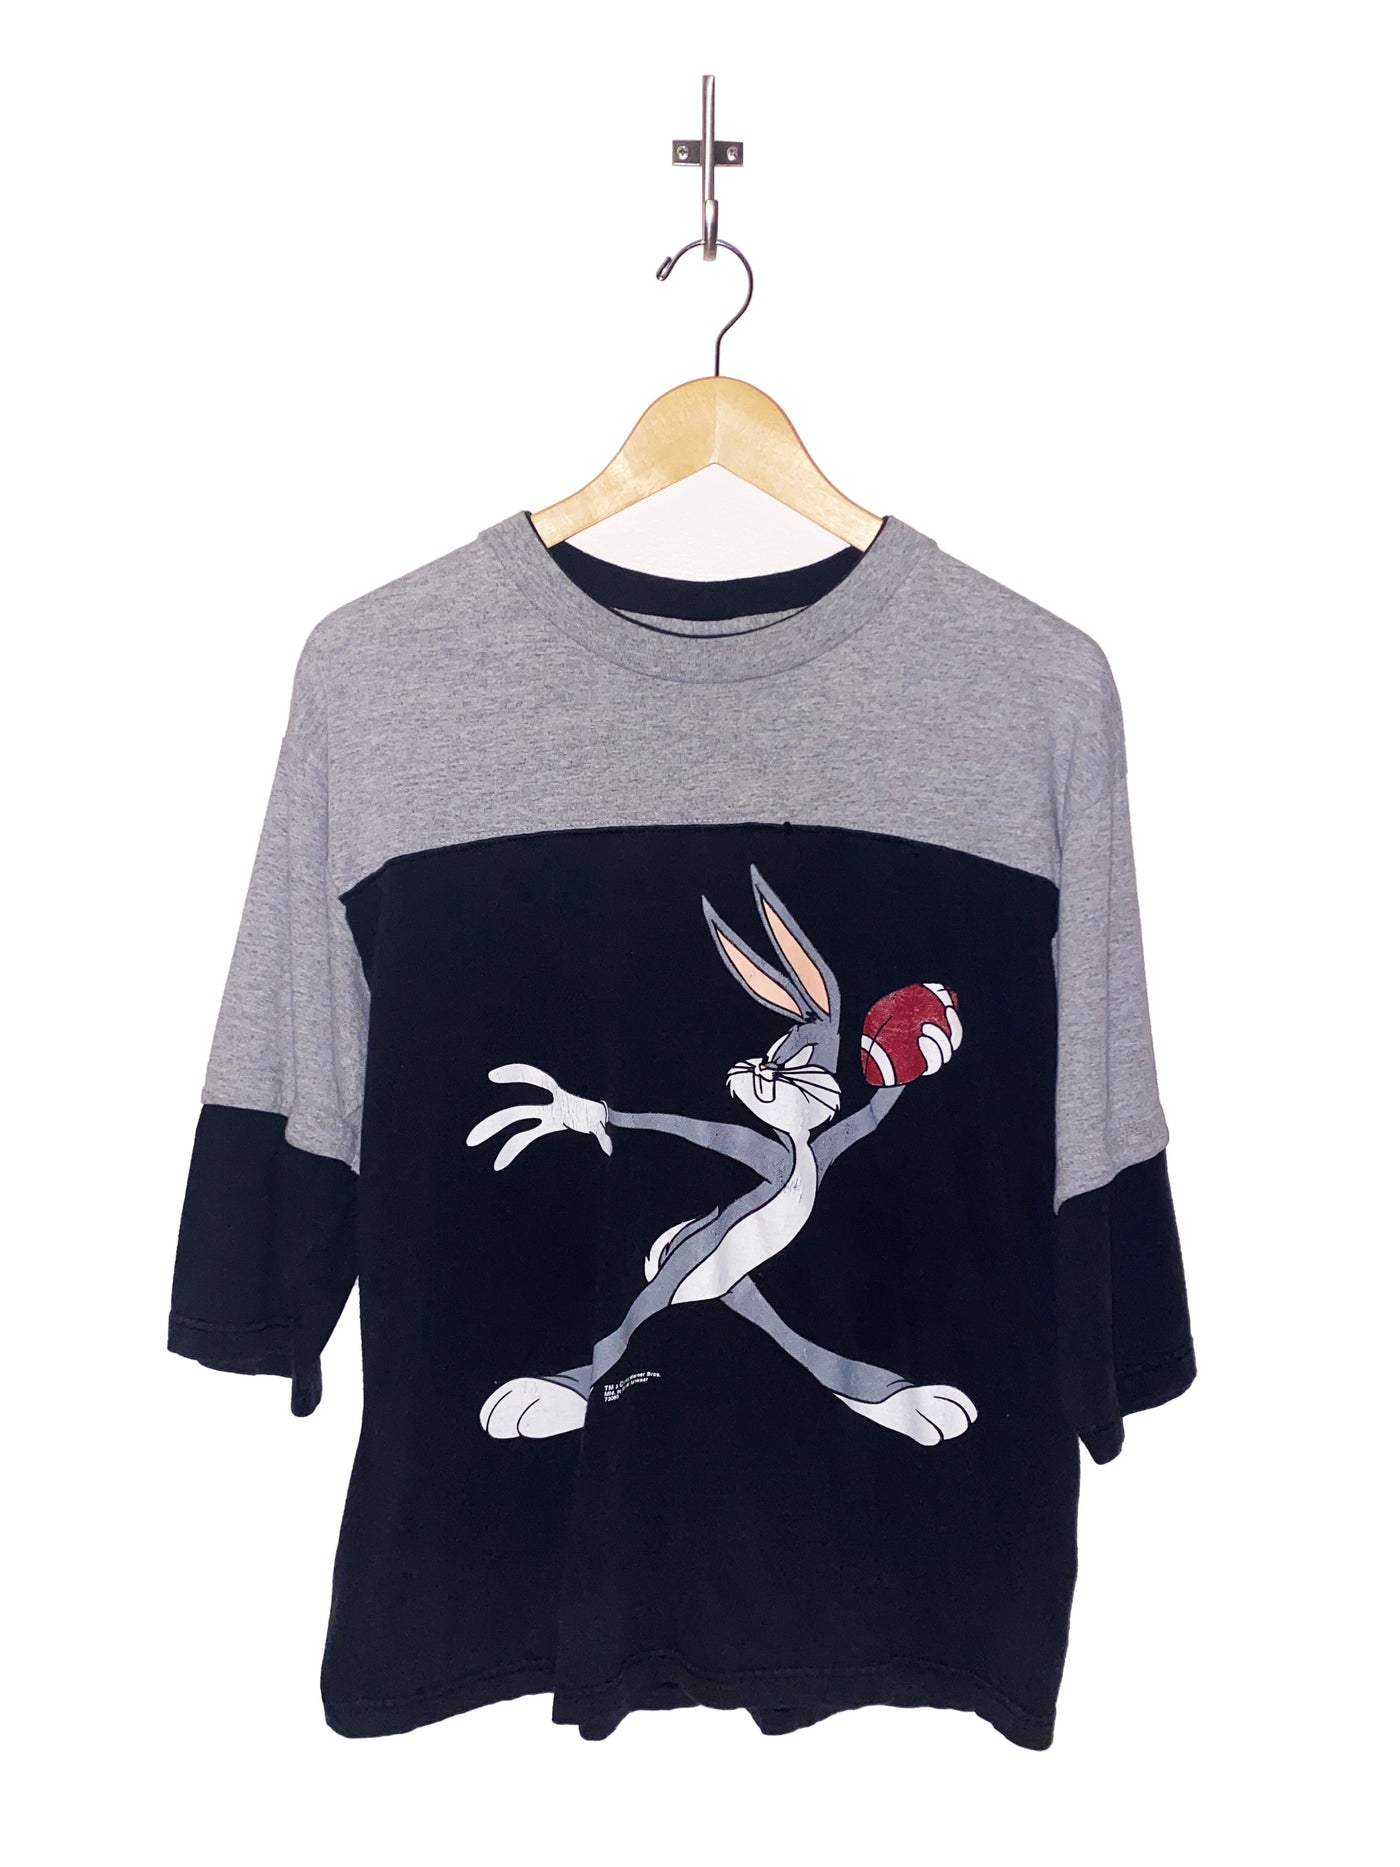 Vintage 1993 Bugs Bunny Baseball Style T-Shirt